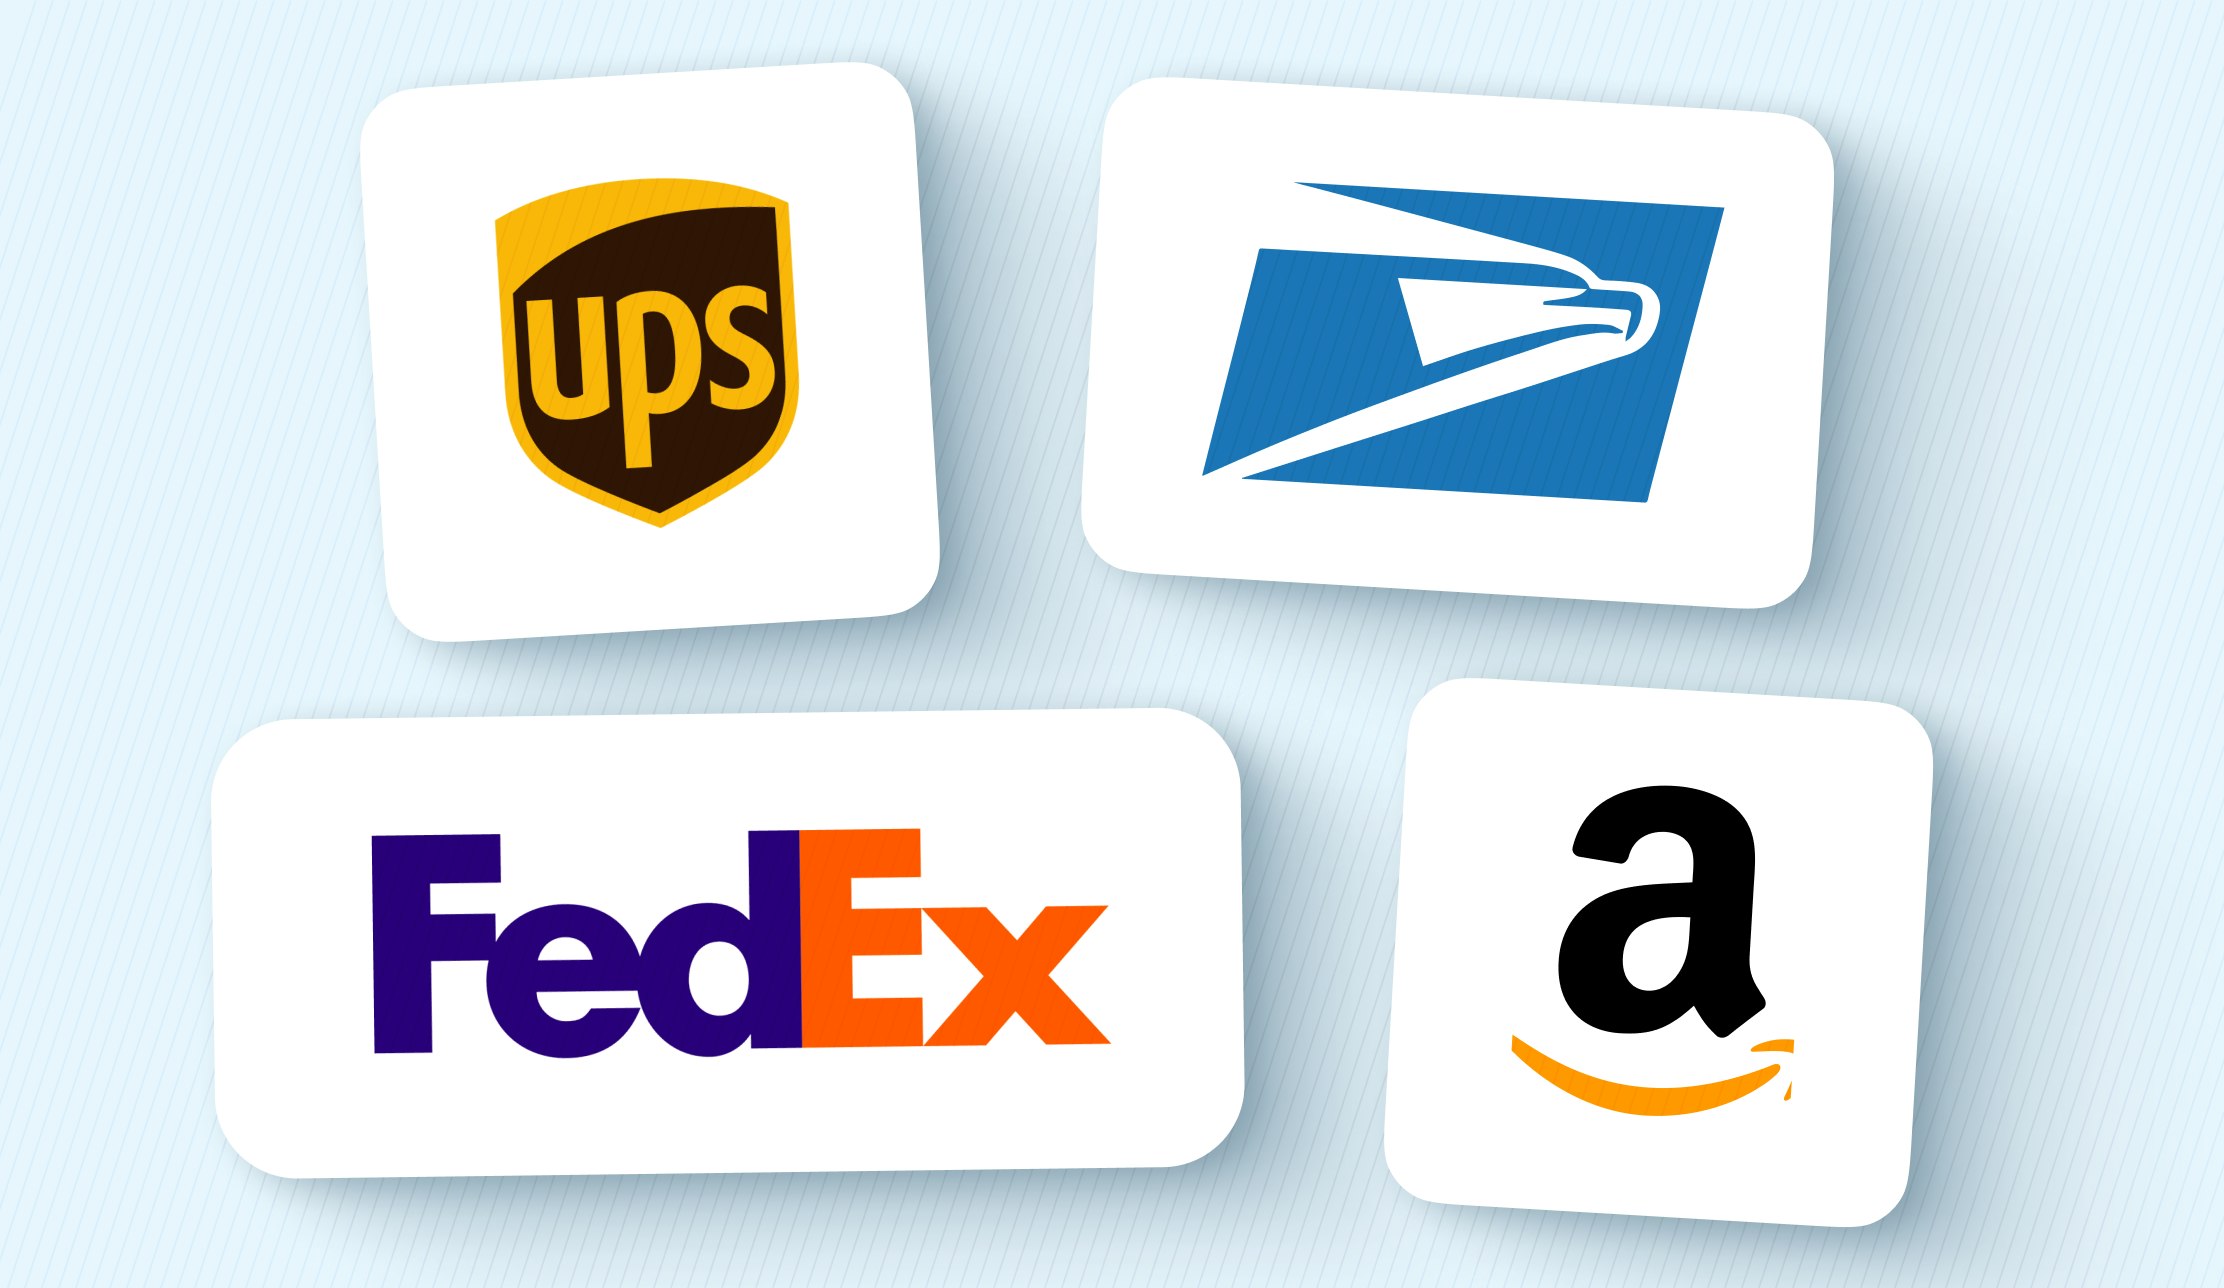 UPS, Amazon, and FedEx logos